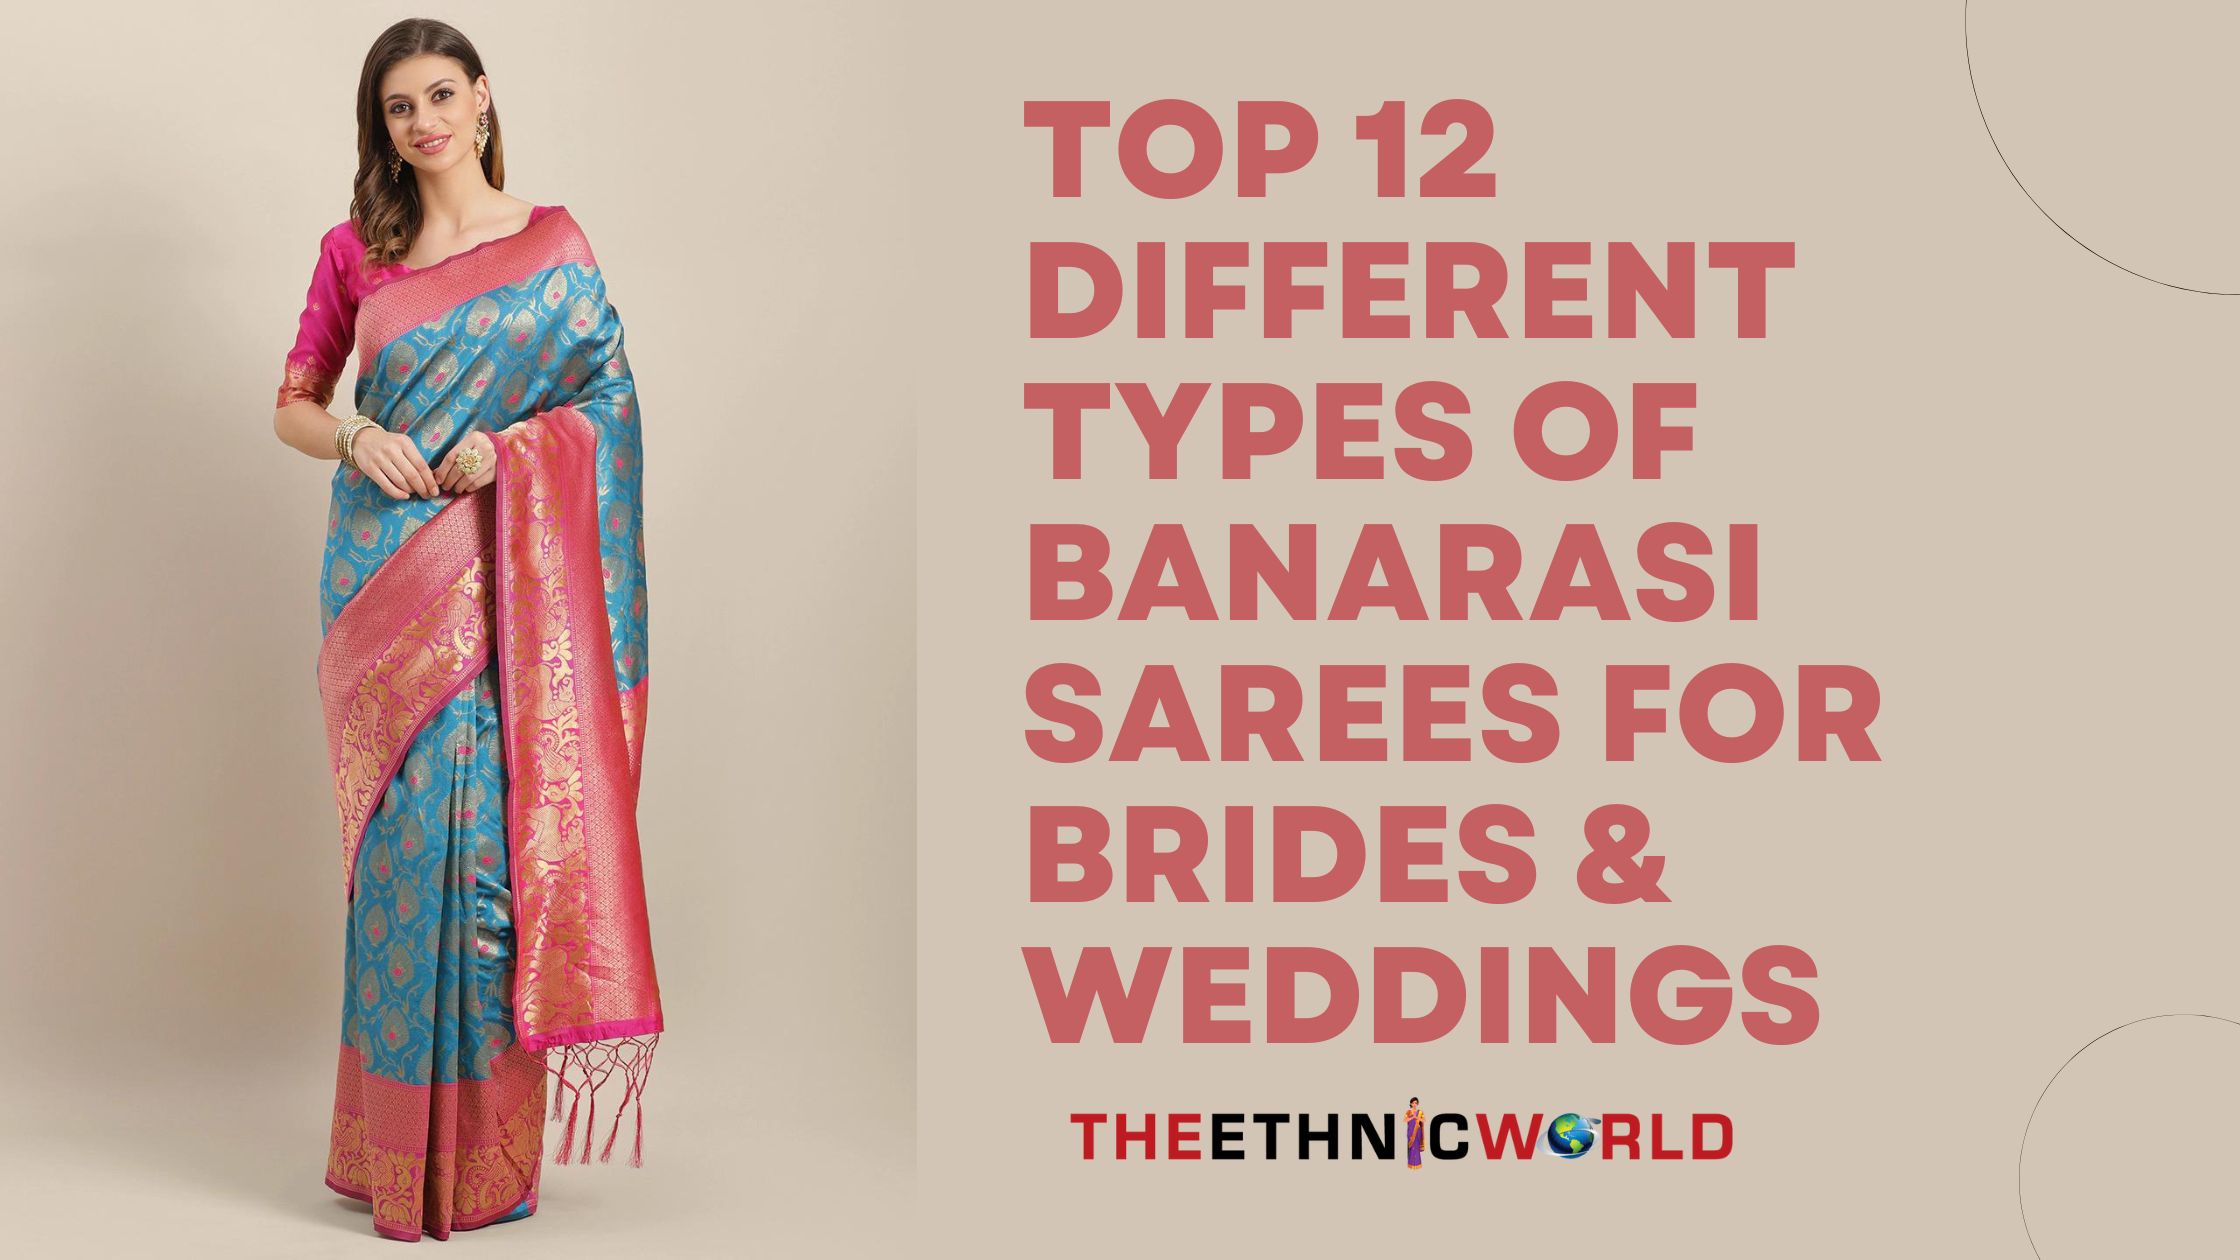 Top 12 Different Types Of Banarasi Sarees For Brides & Weddings